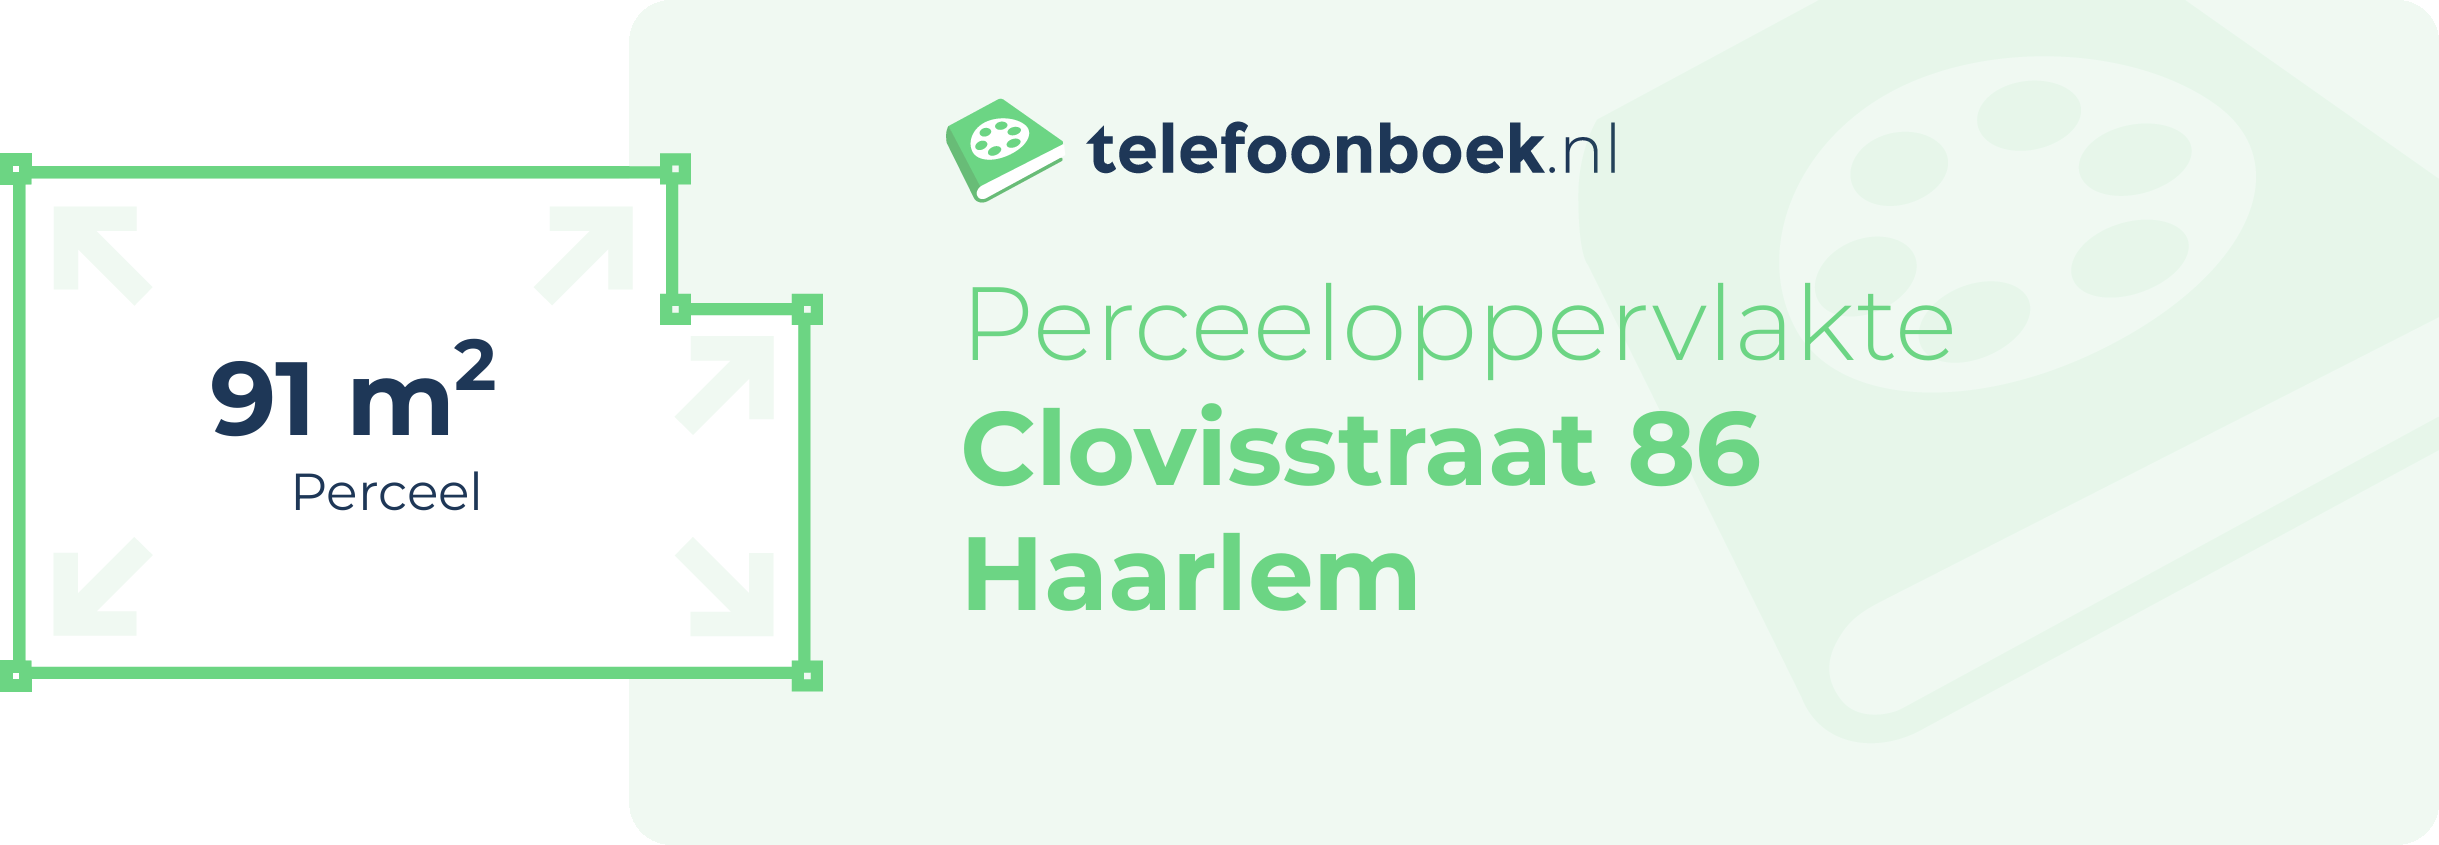 Perceeloppervlakte Clovisstraat 86 Haarlem